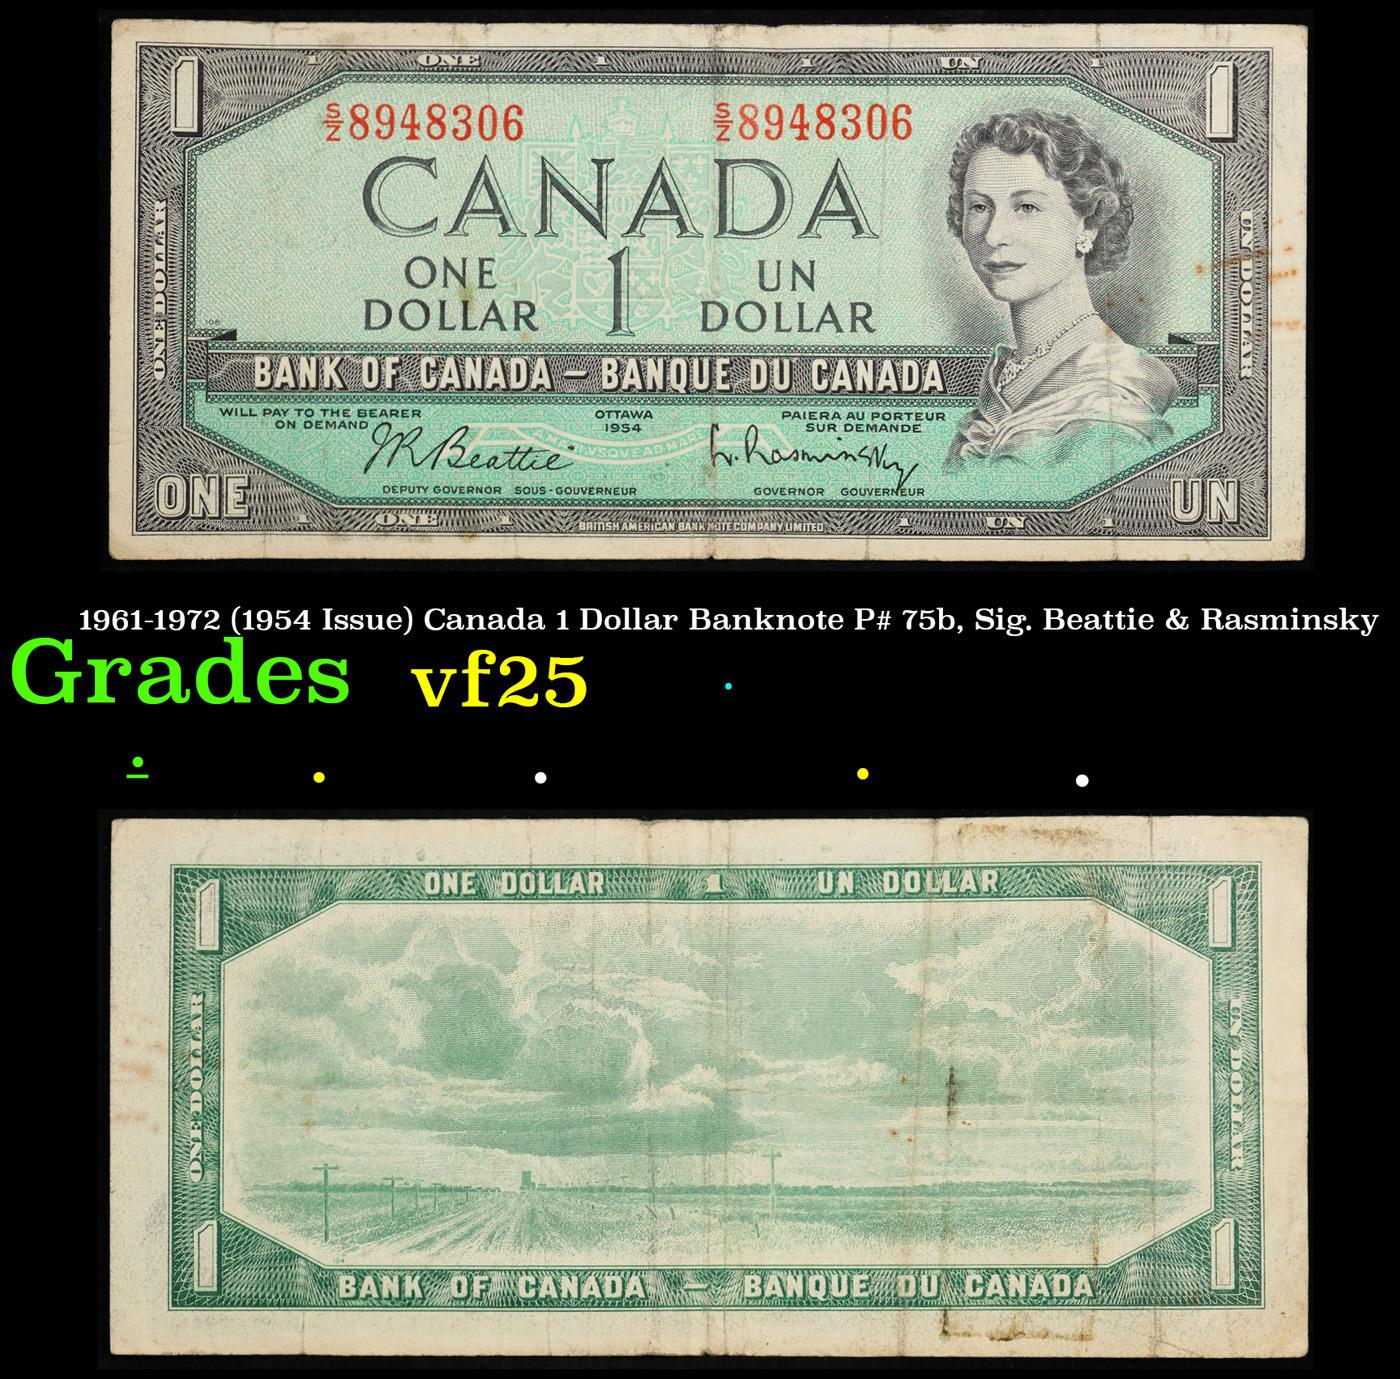 1961-1972 (1954 Issue) Canada 1 Dollar Banknote P# 75b, Sig. Beattie & Rasminsky Grades vf+